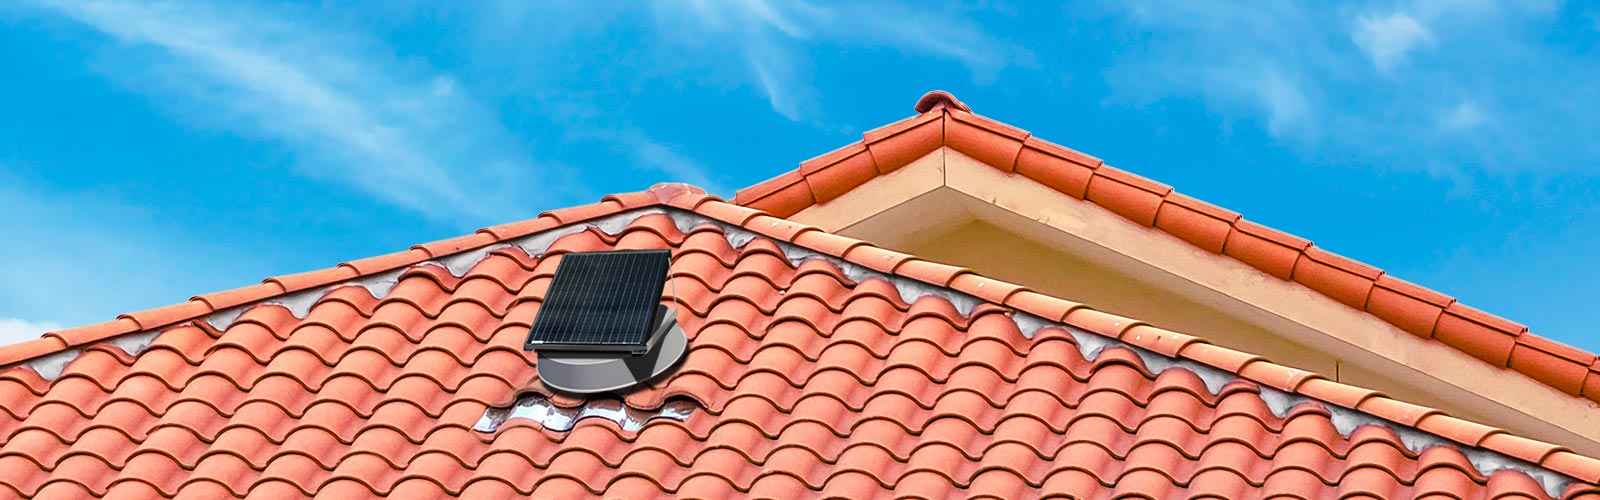 Solar Attic Fan Installed on Clay Roof